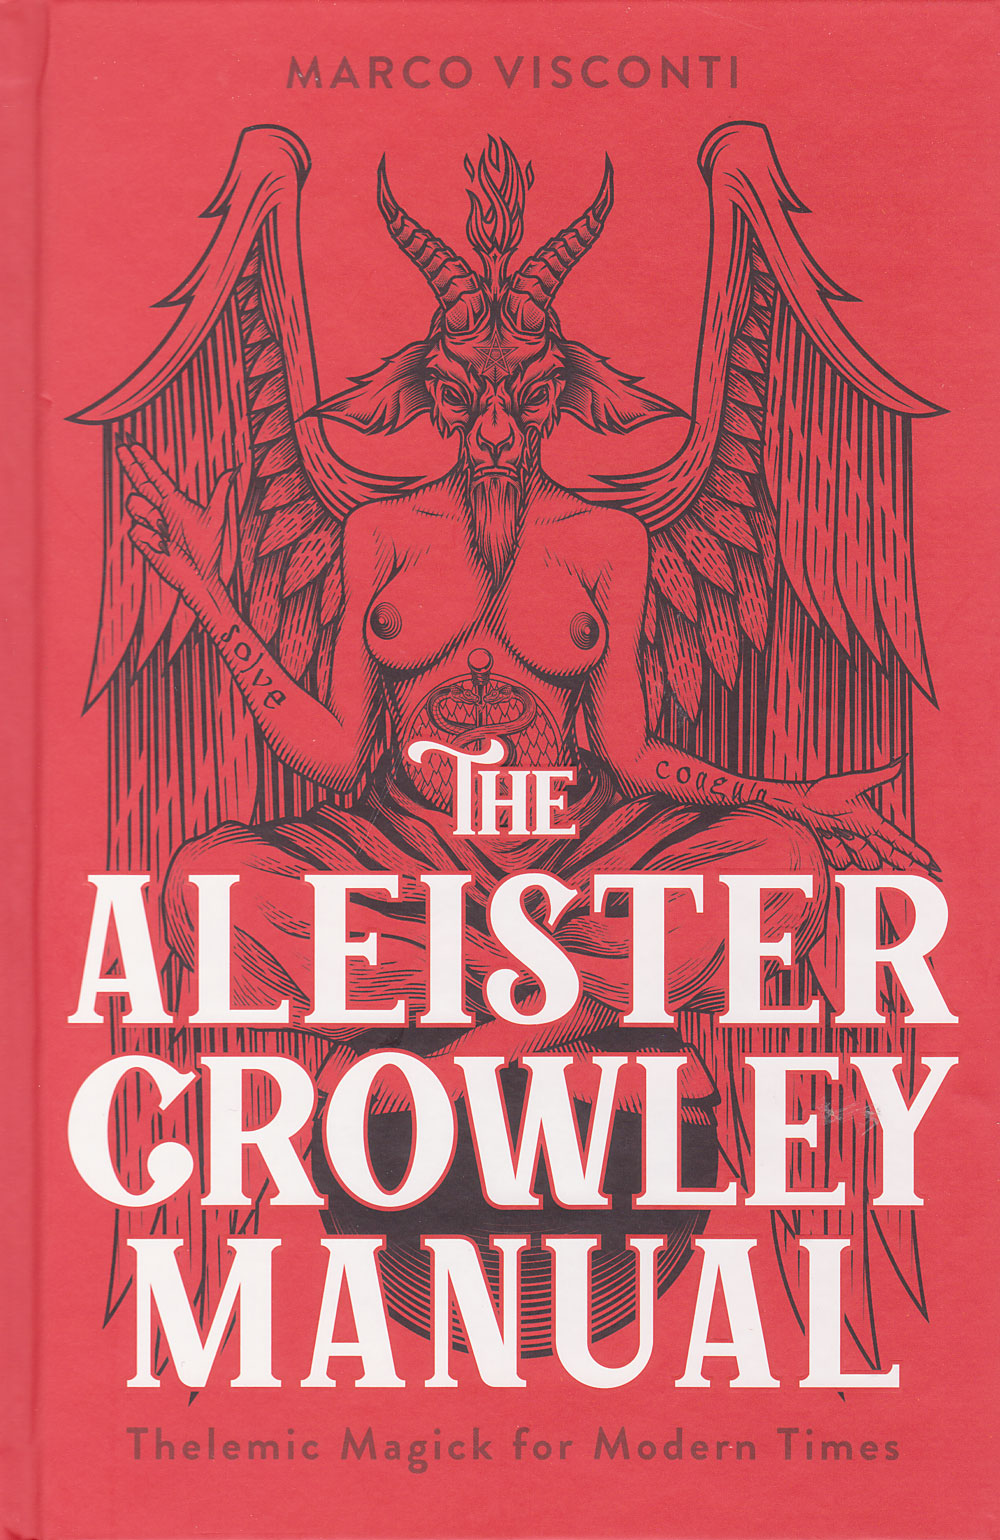 Aleister Crowley Manual